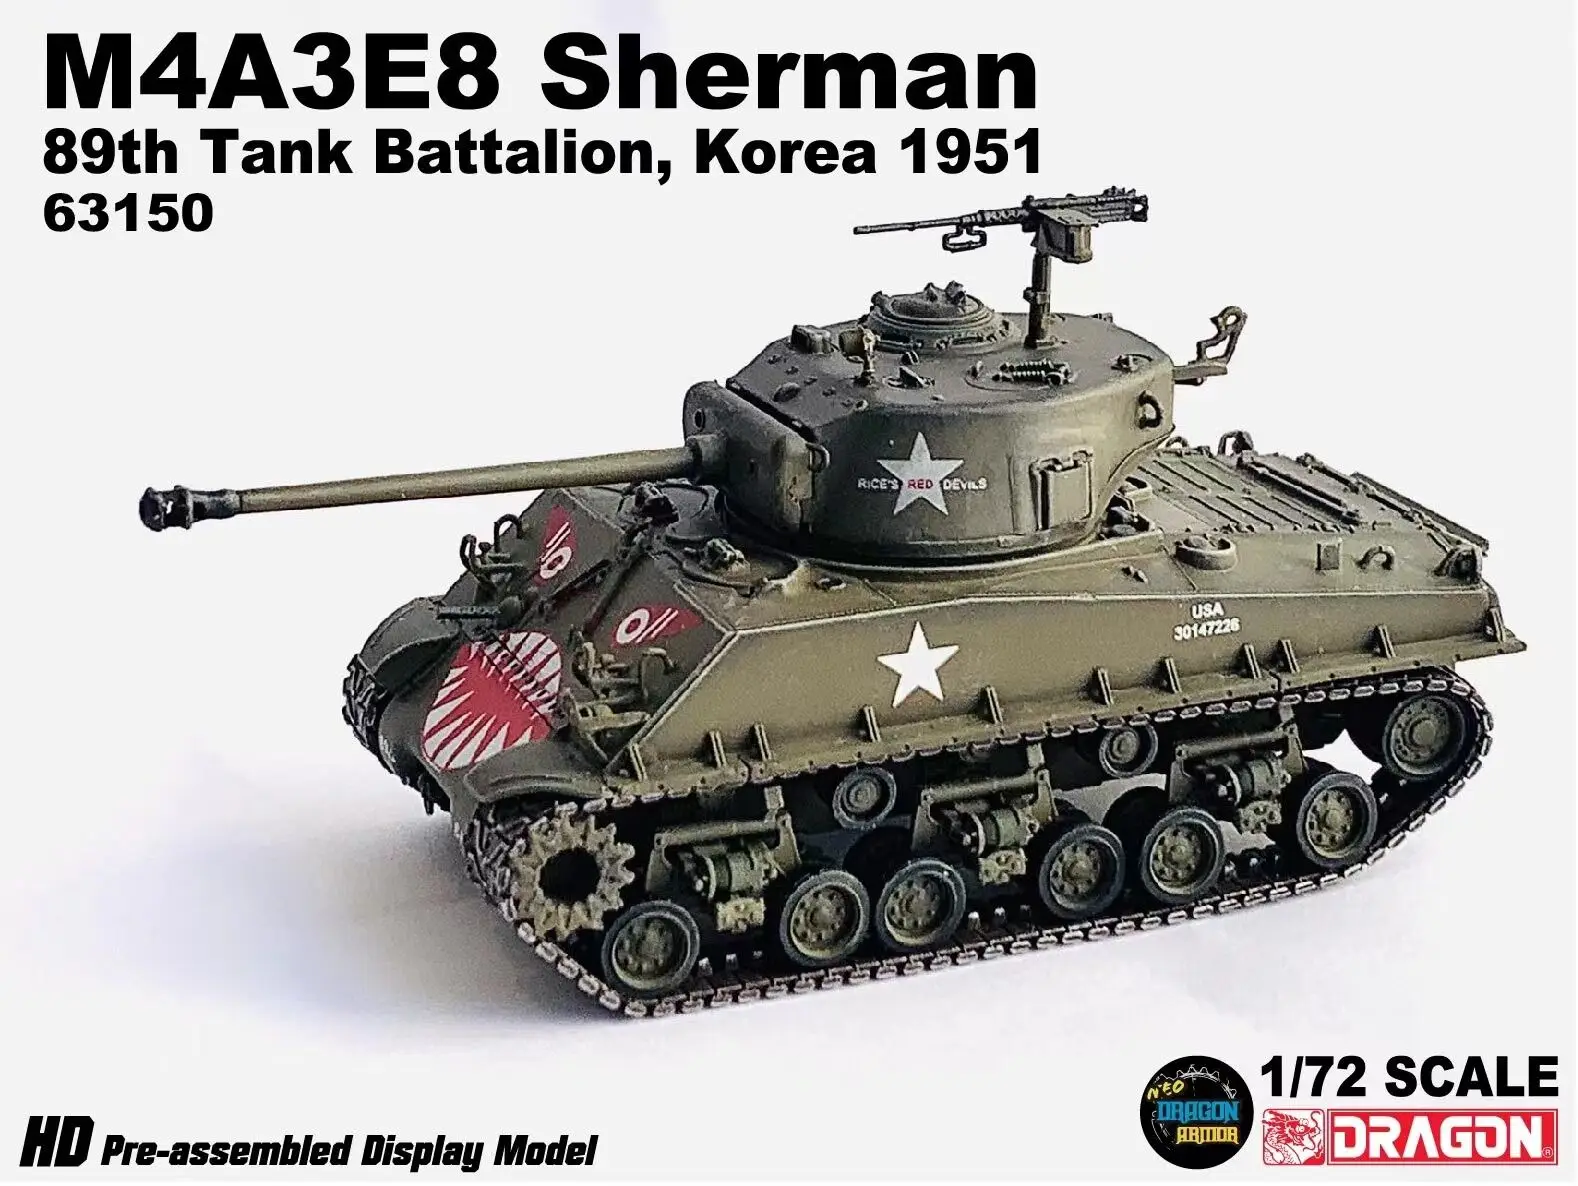 

1/72 Dragon M4A3E8 Sherman Tiger Face 89th Tank Battalion Korea 1951/24th Infantry Div. Han River 63150 Soldier Model Collection